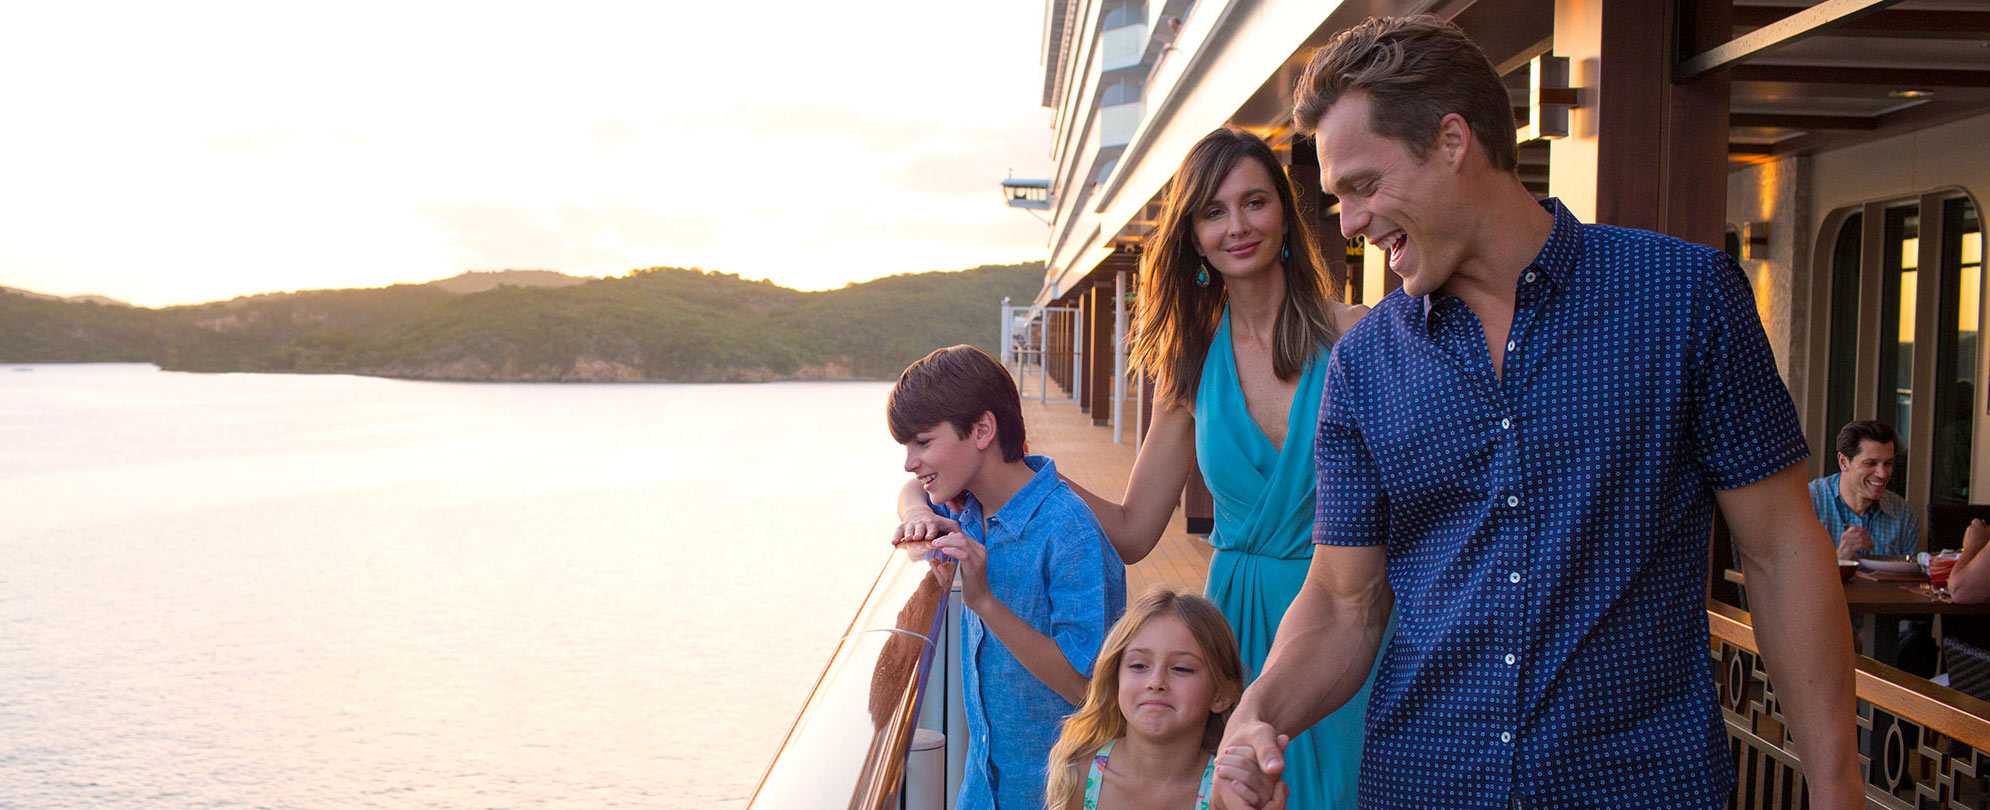 A family of four enjoying their time on a cruise ship.